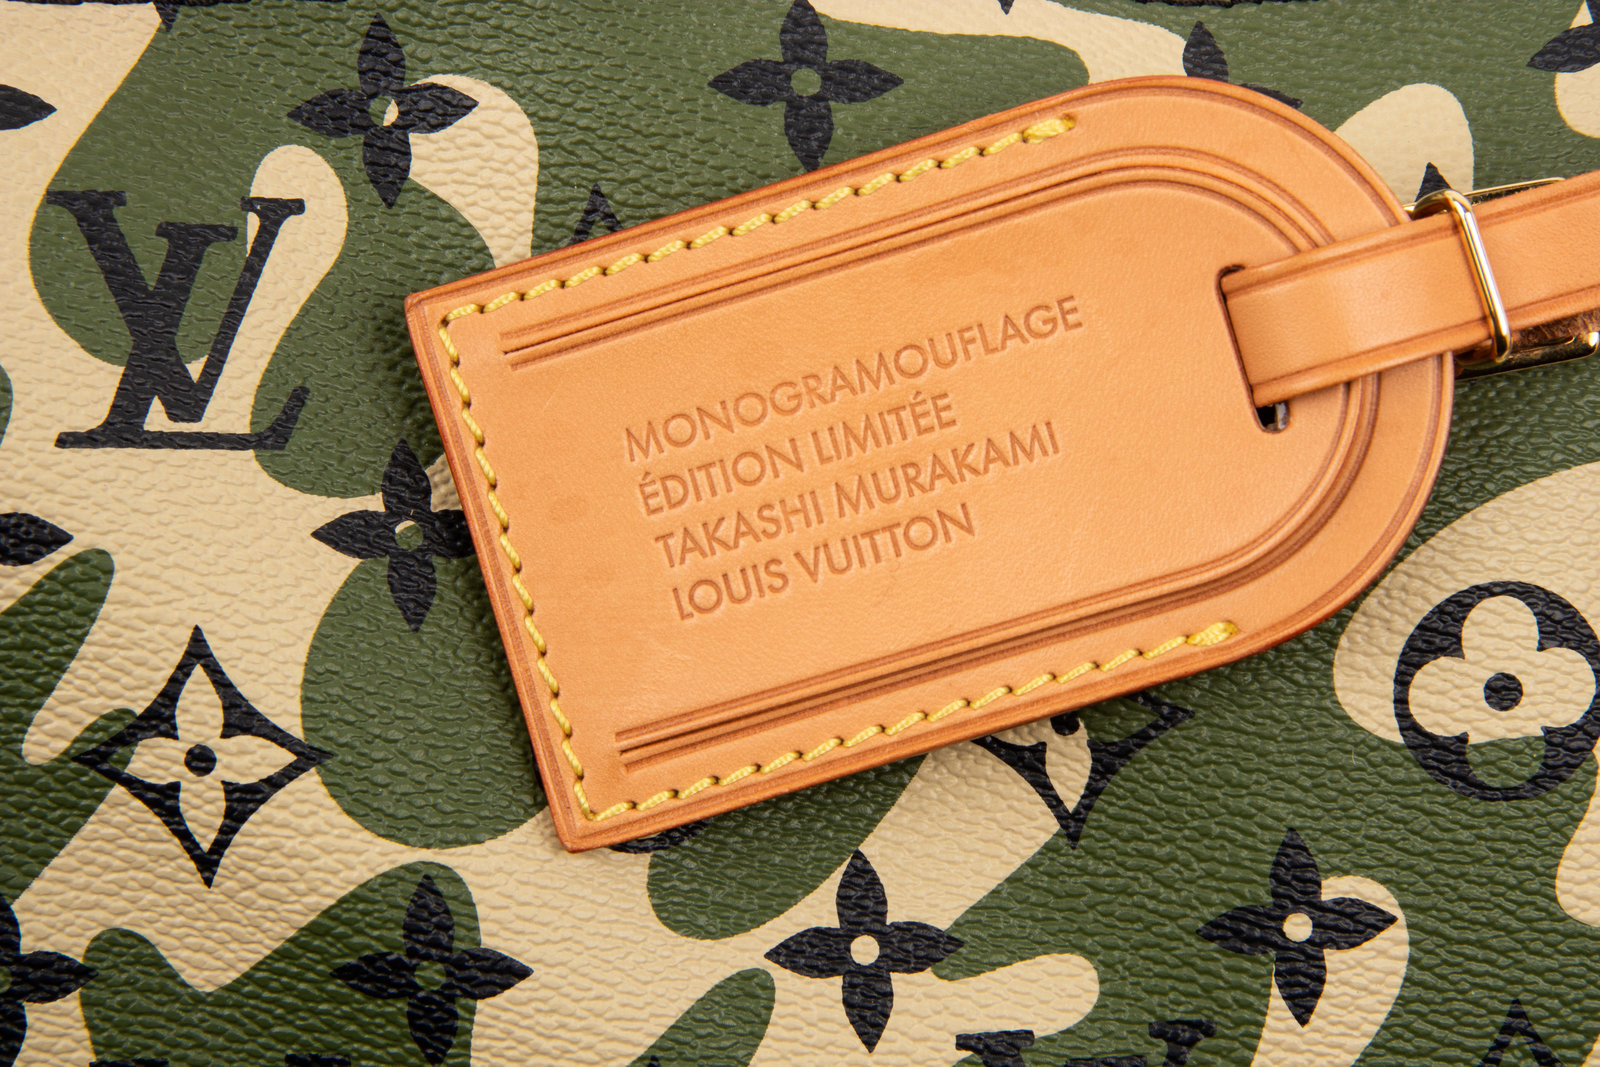 Louis Vuitto Ltd. Ed. takashi Murakami N Handbag Auction